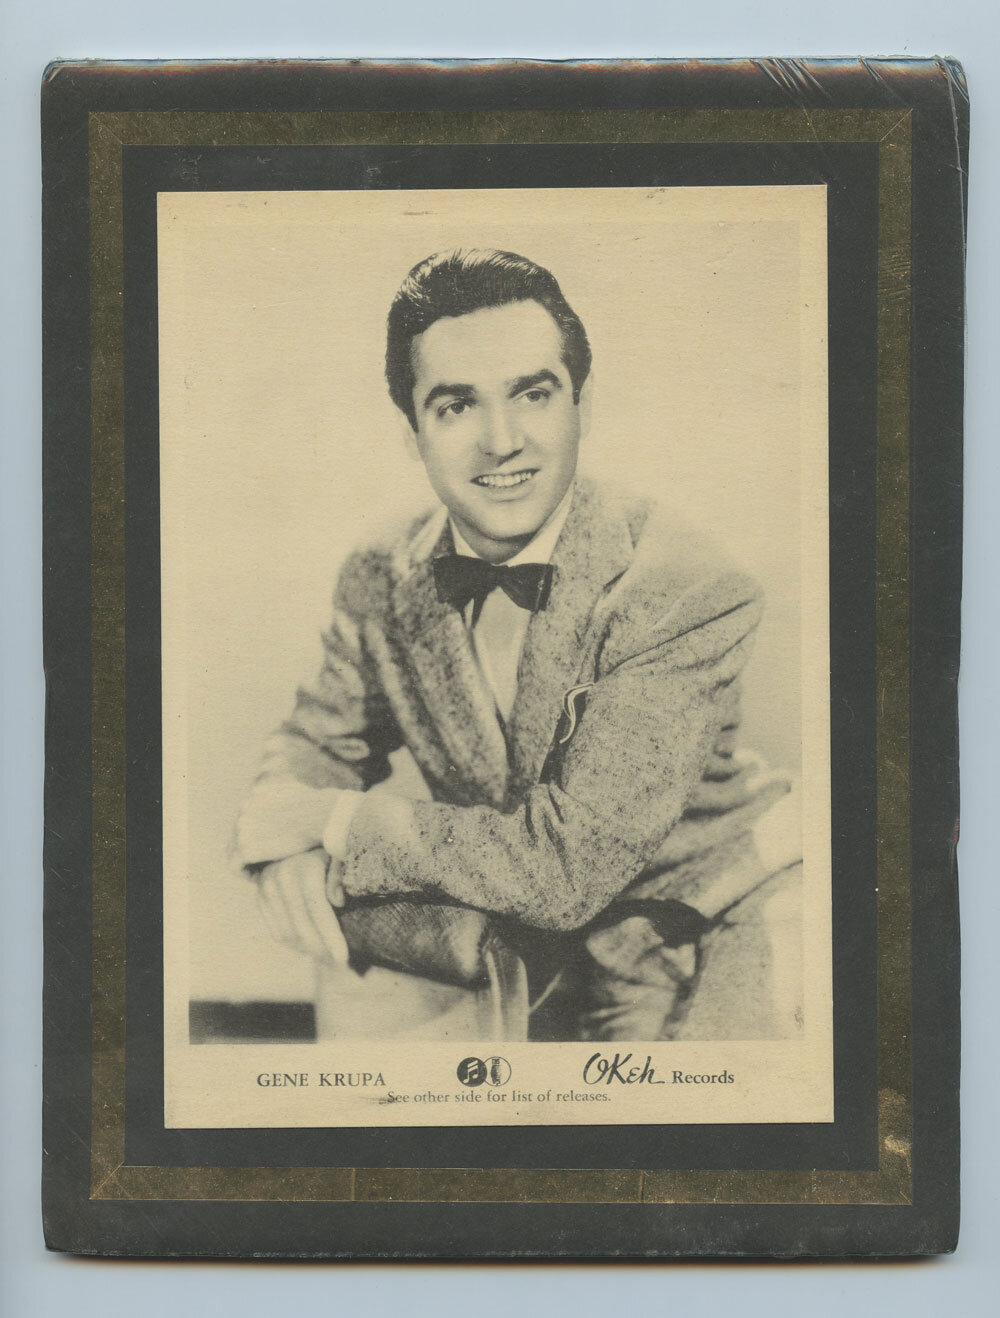 Gene Krupa Photo 1940 New Single Promo OKEH Records 